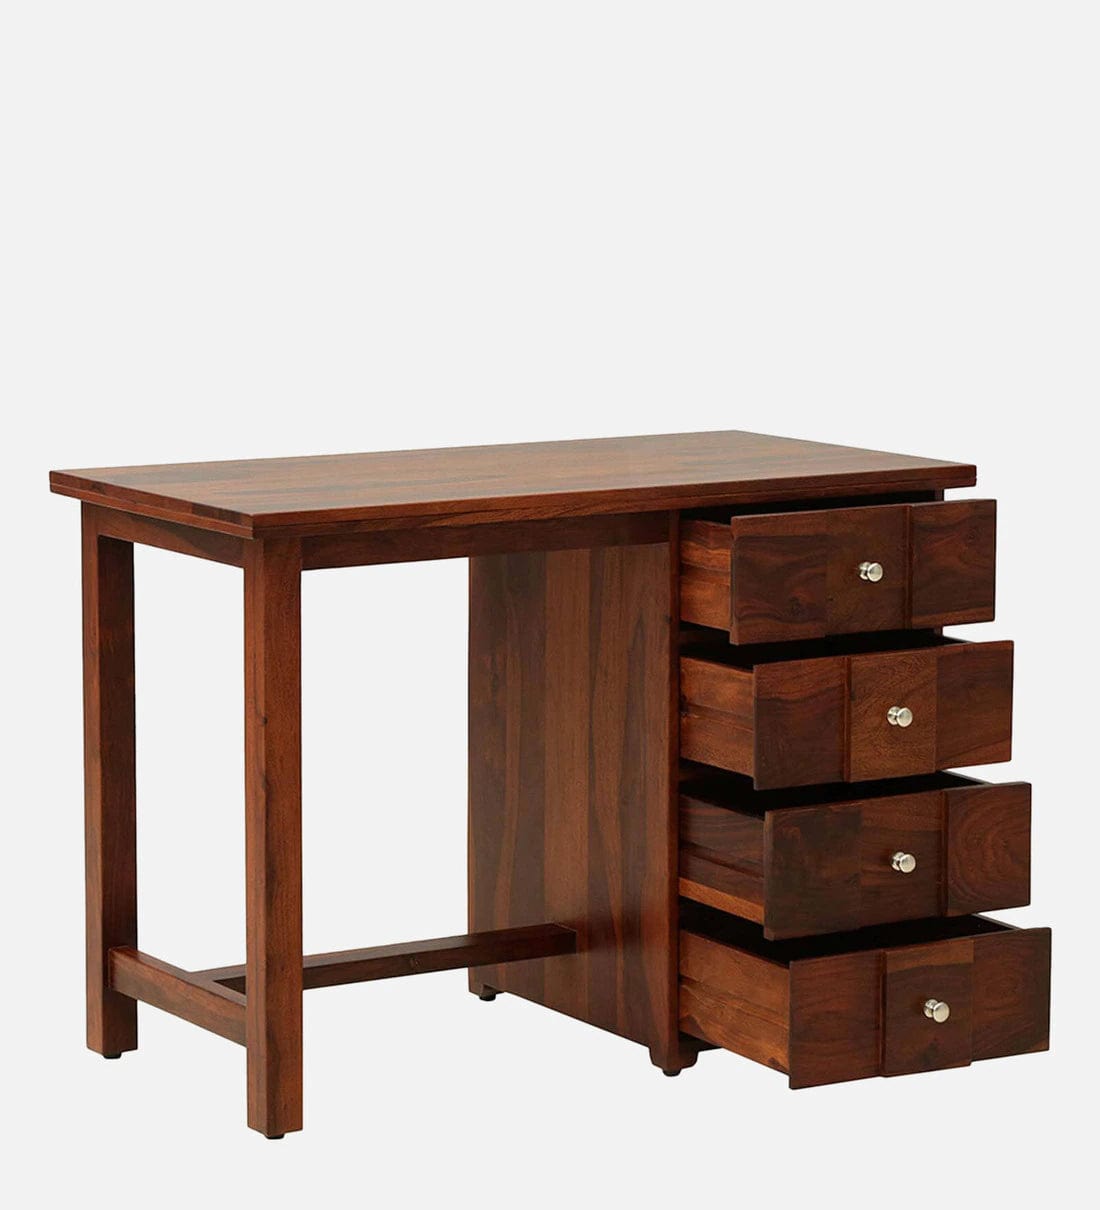 Kelty Sheesham Wood Writing Table In Honey Oak Finish With Drawers,